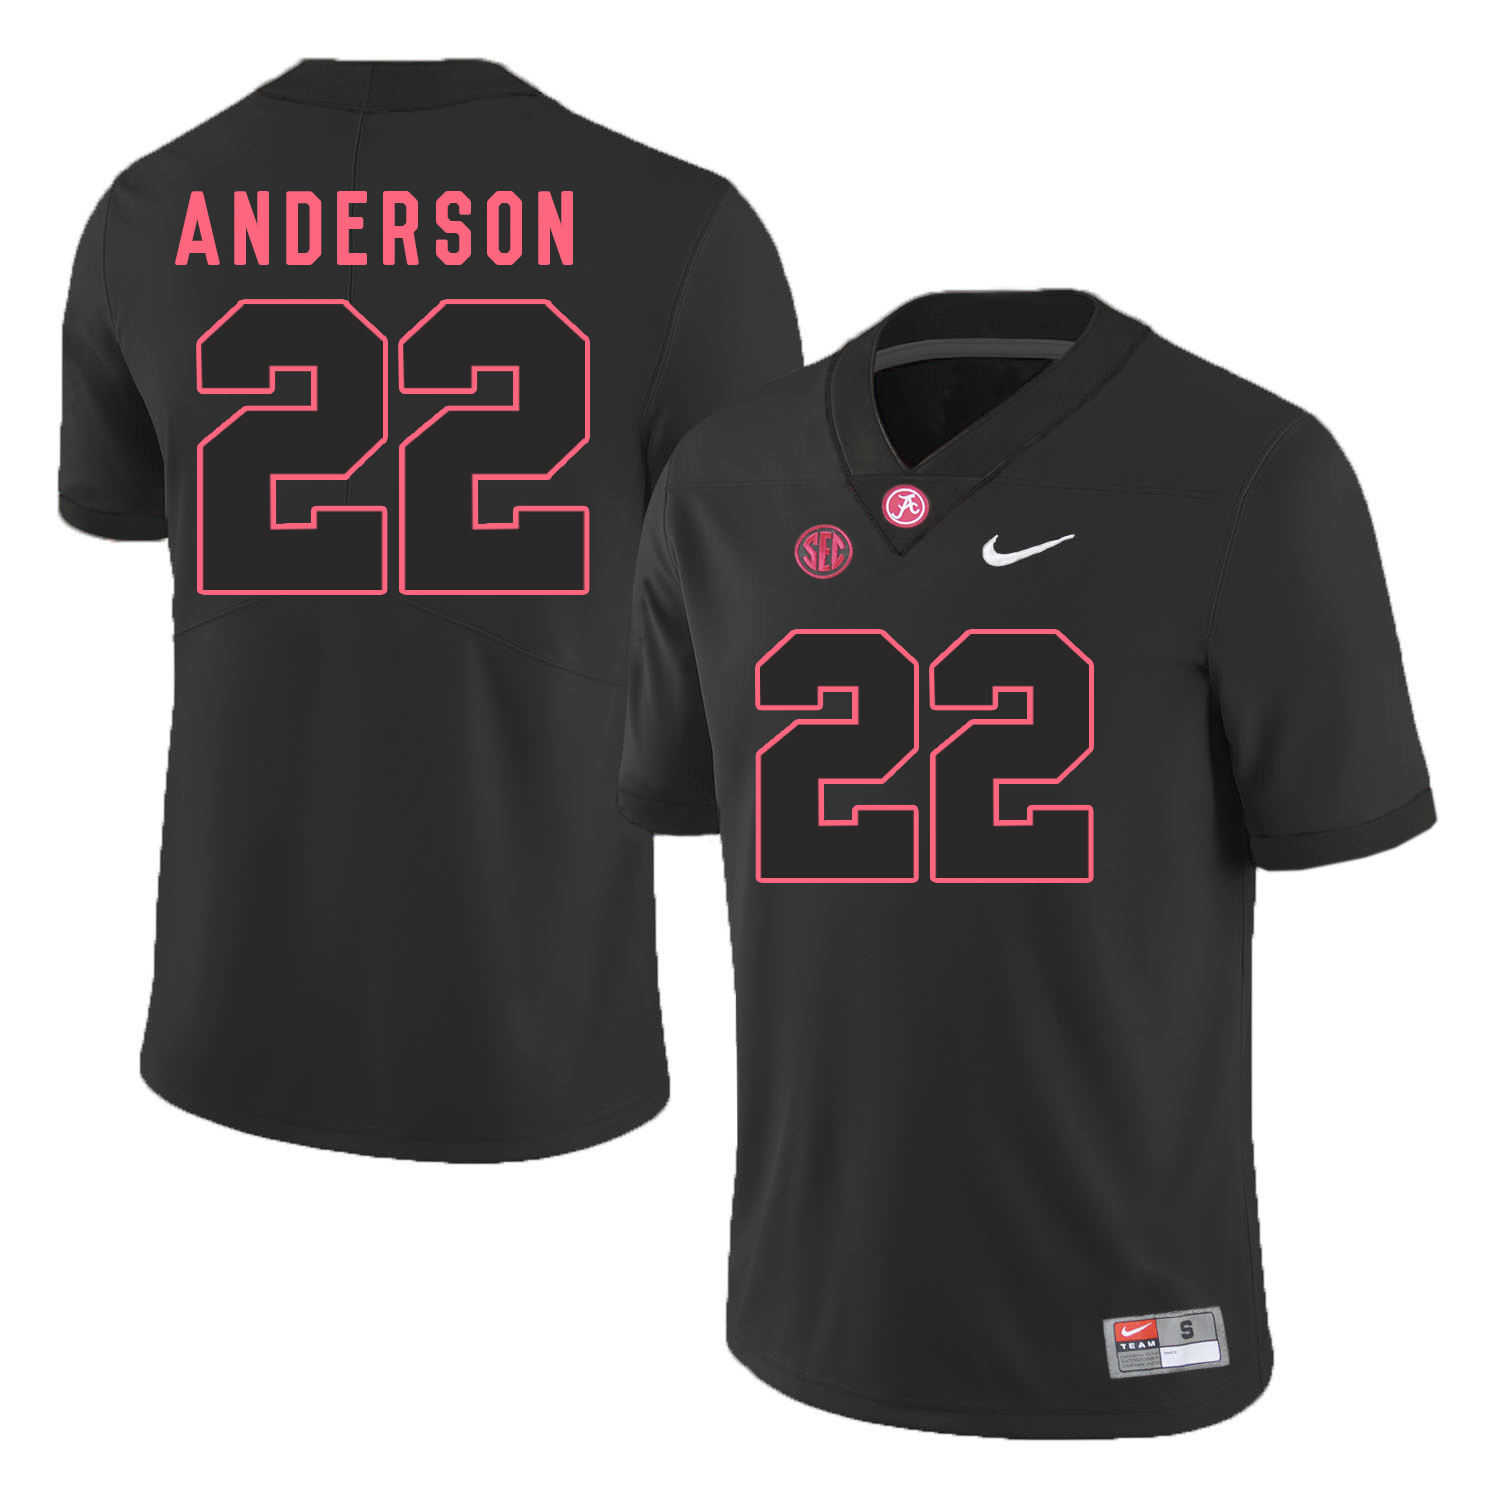 NCAA Alabama Crimson Tide #22 Anderson Black Shawdow Football Jersey